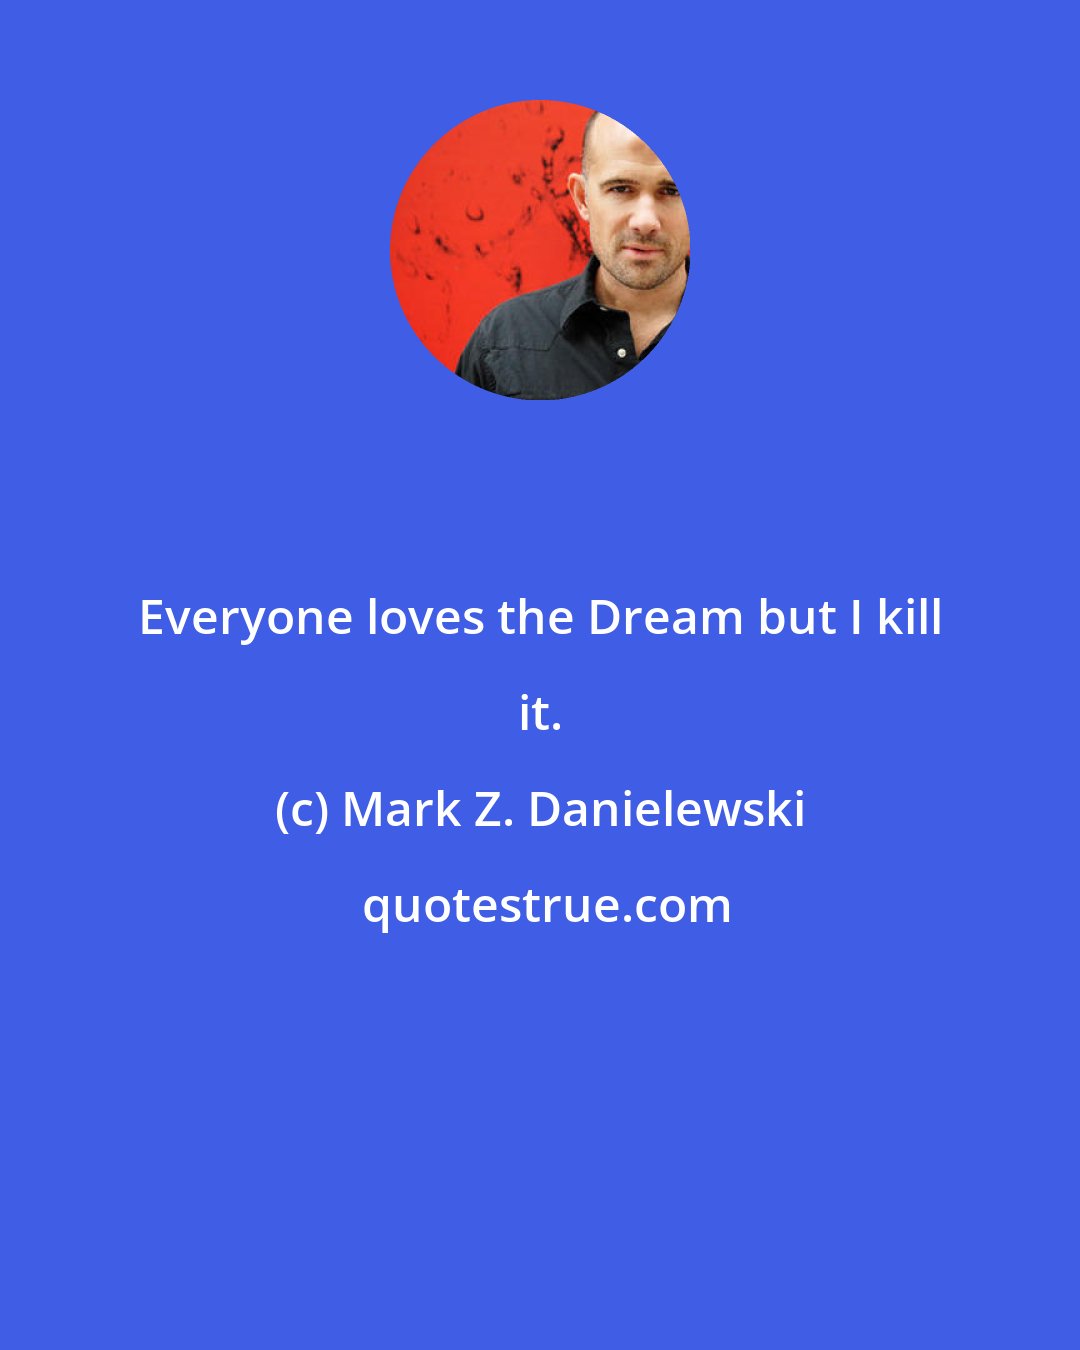 Mark Z. Danielewski: Everyone loves the Dream but I kill it.